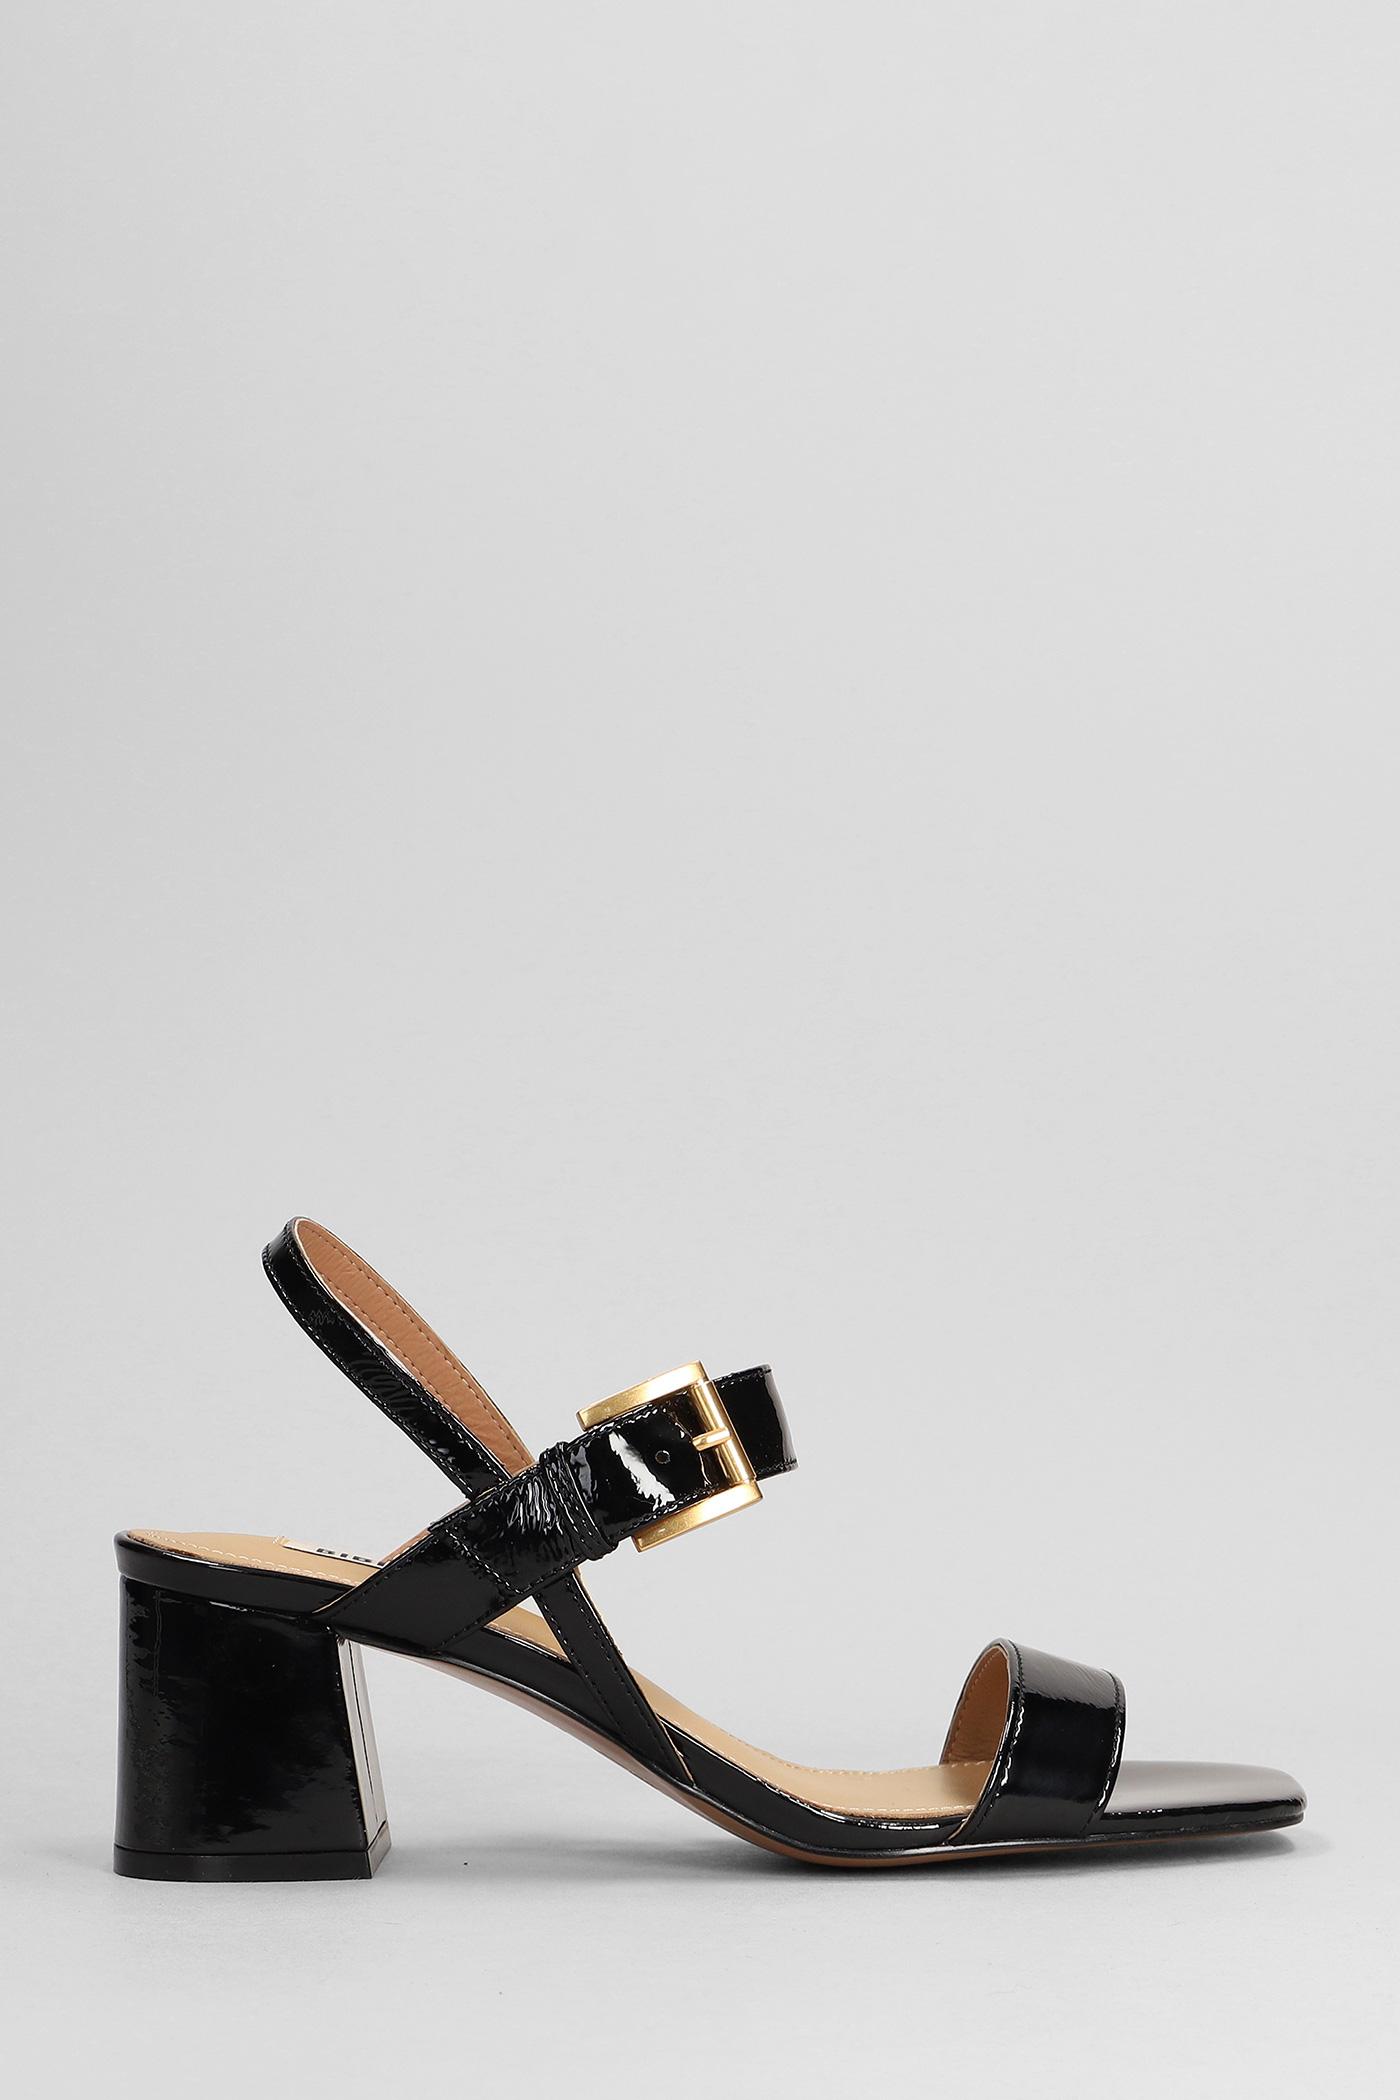 Bibi Lou Sandals In Black Patent Leather | Lyst